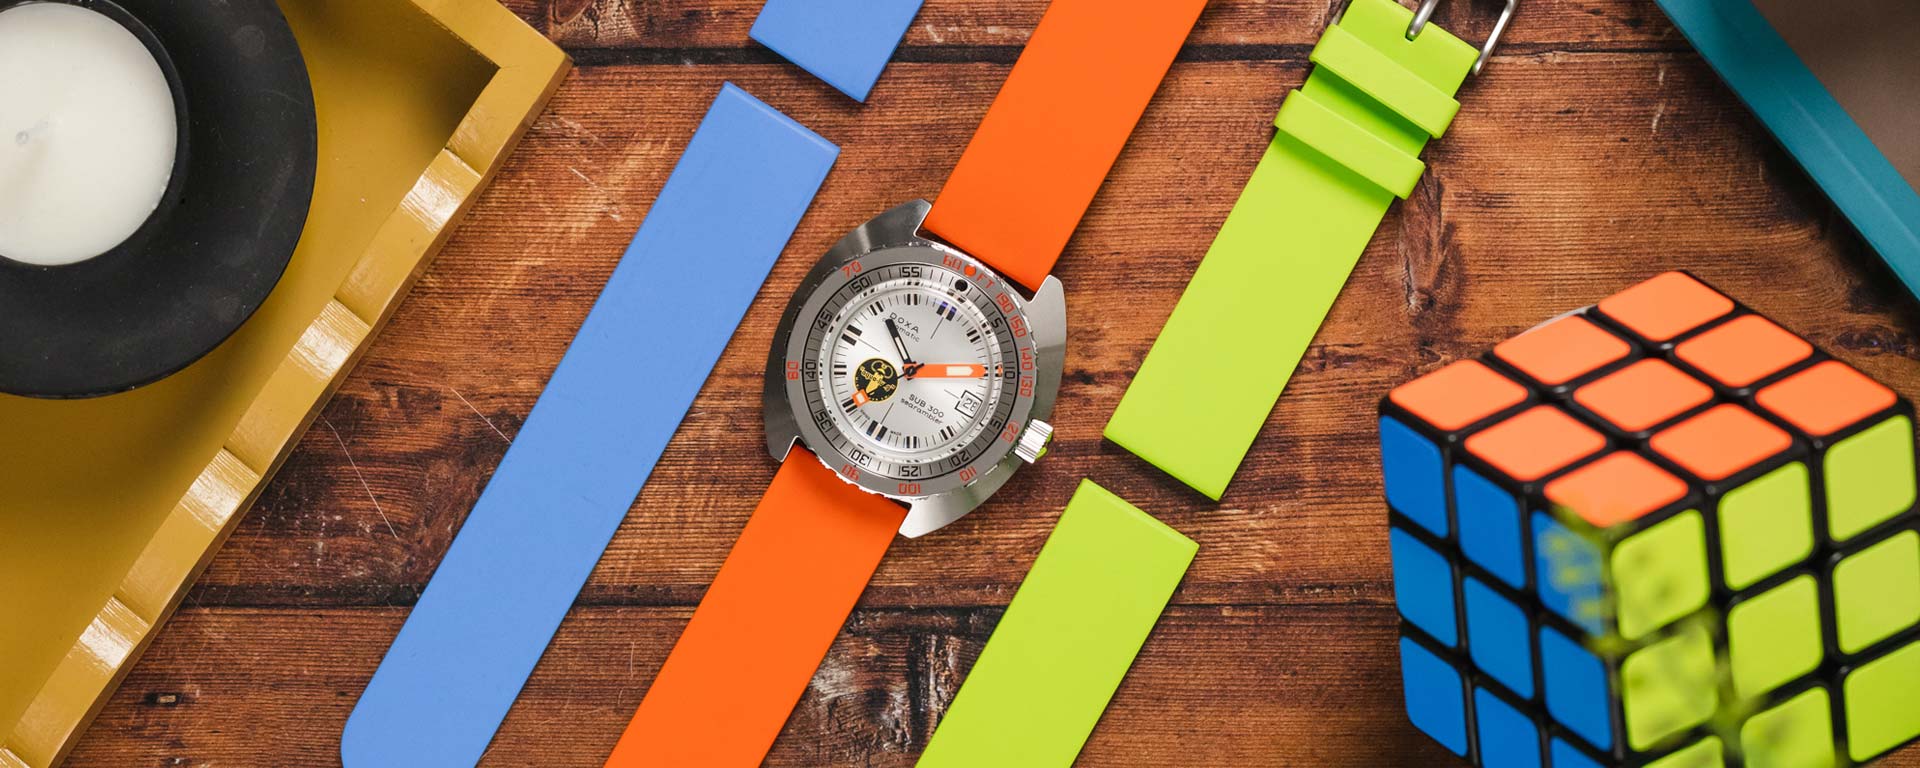 Vibrant rubber watch straps